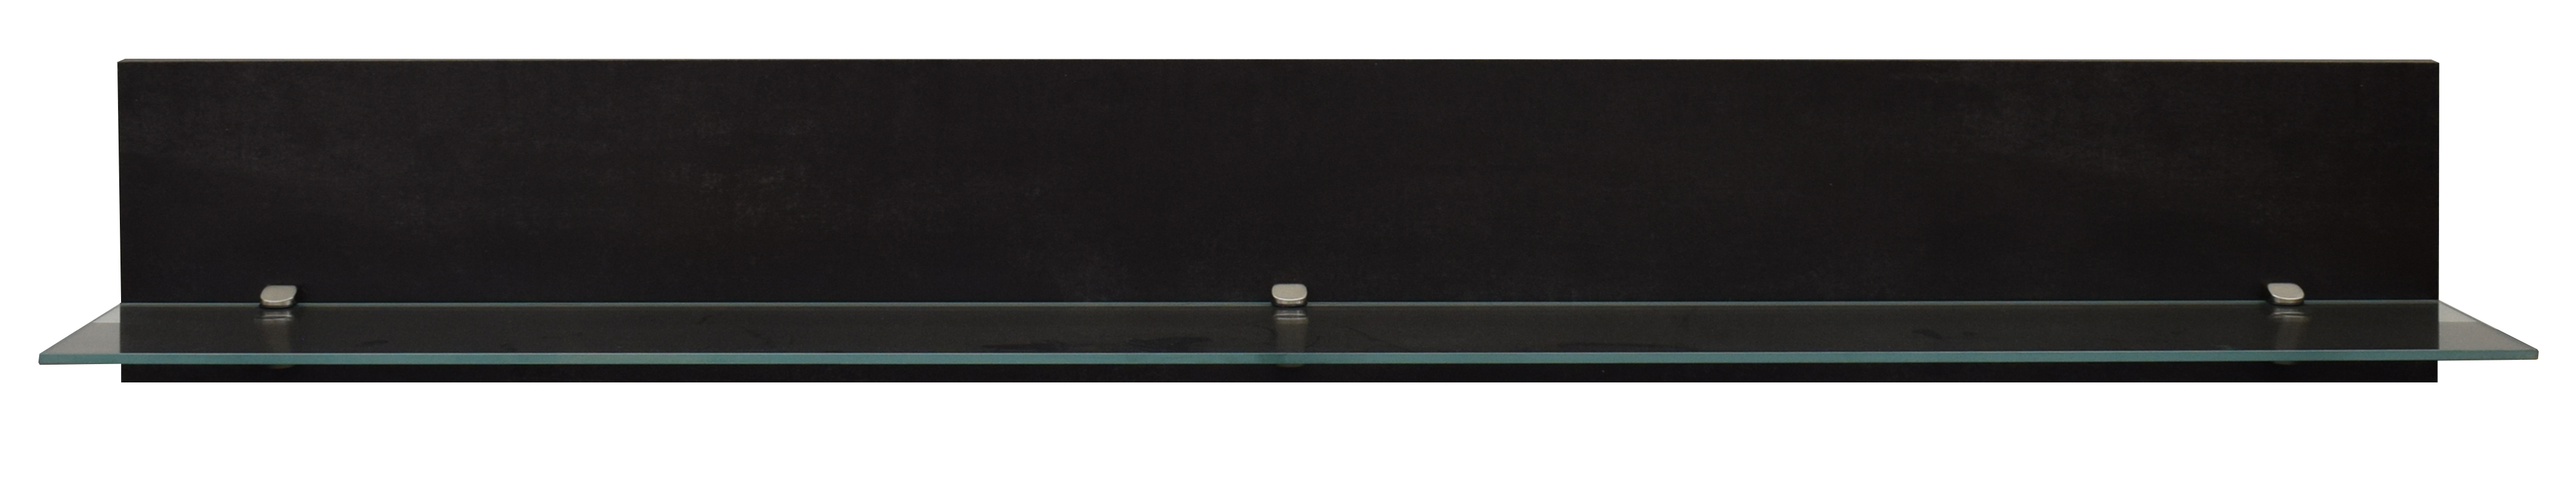 Wandboard Mailo Glasboden Schwarzstahl Optik Regal Board 165 cm breit